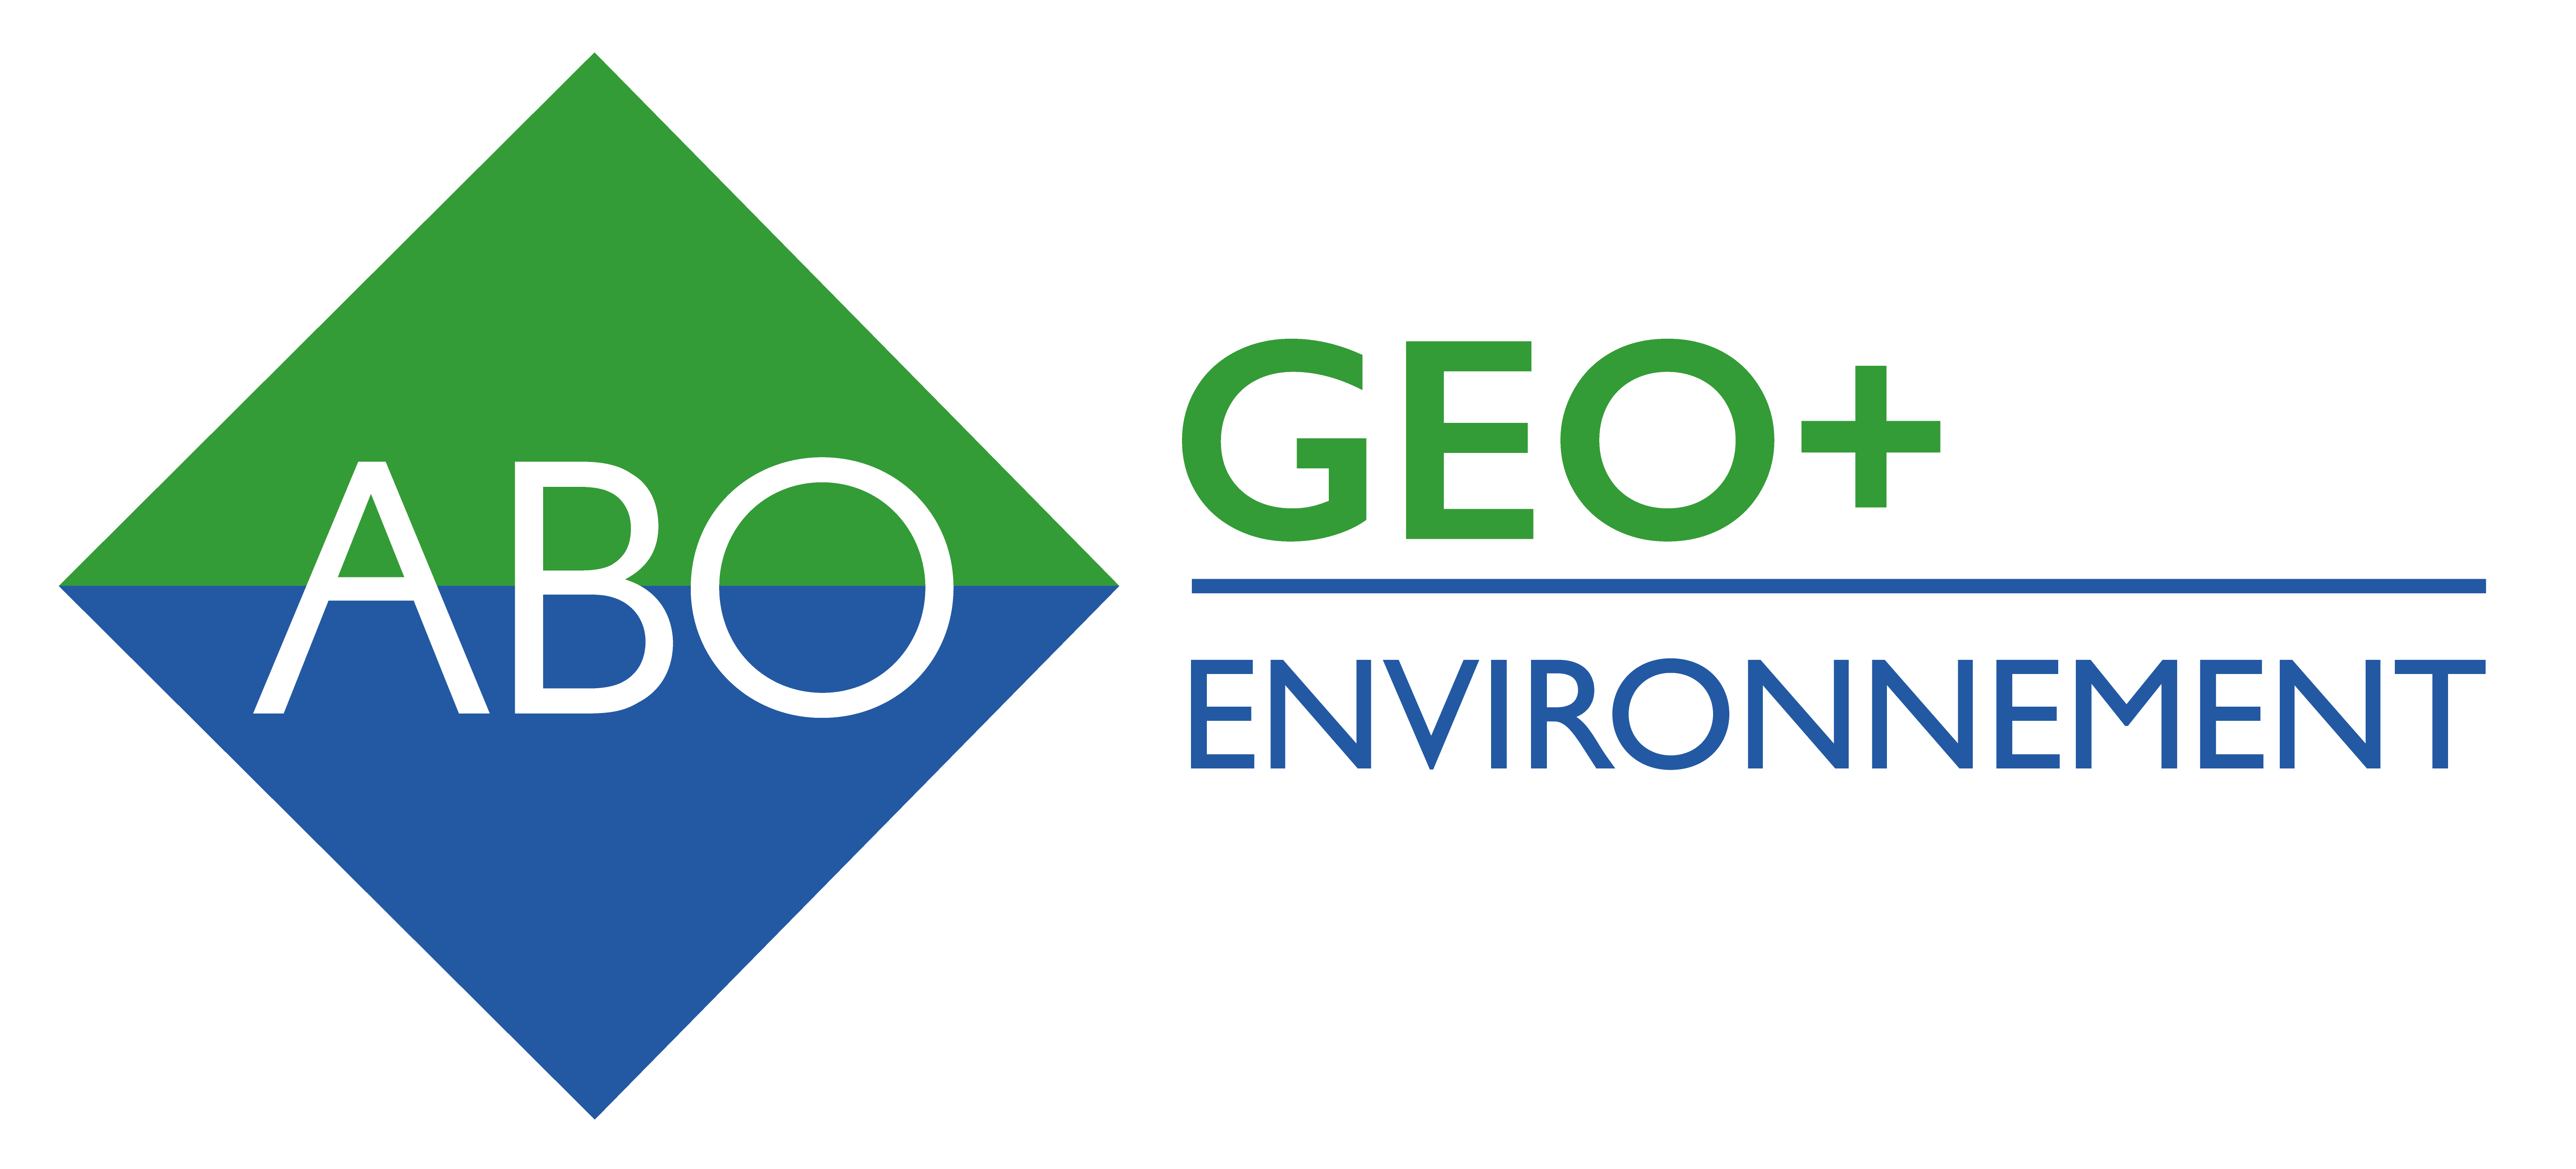 Logo : ABO-GEO+ ENVIRONNEMENT